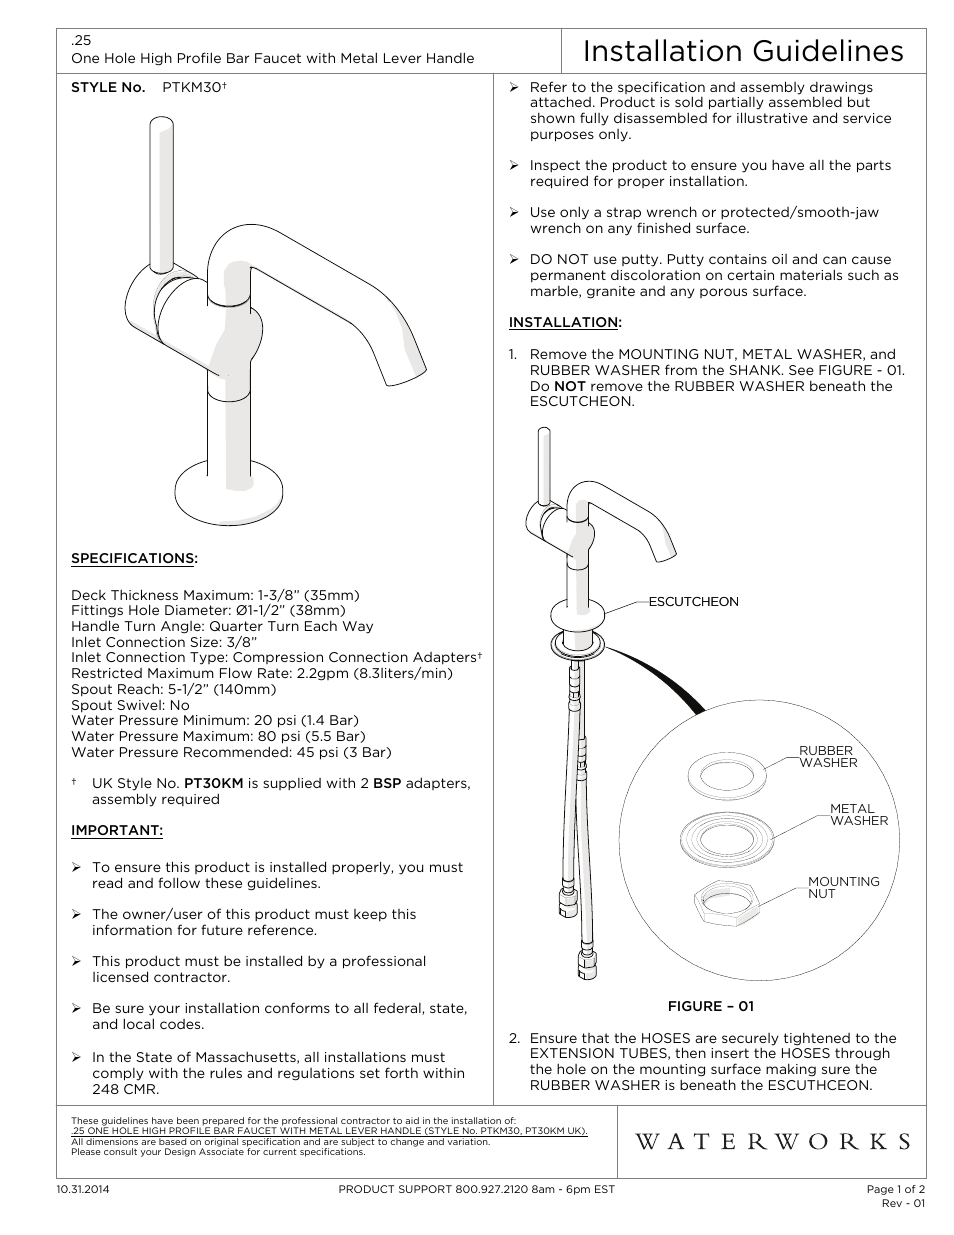 .25 One Hole High Profile Bar Faucet, Metal Handle